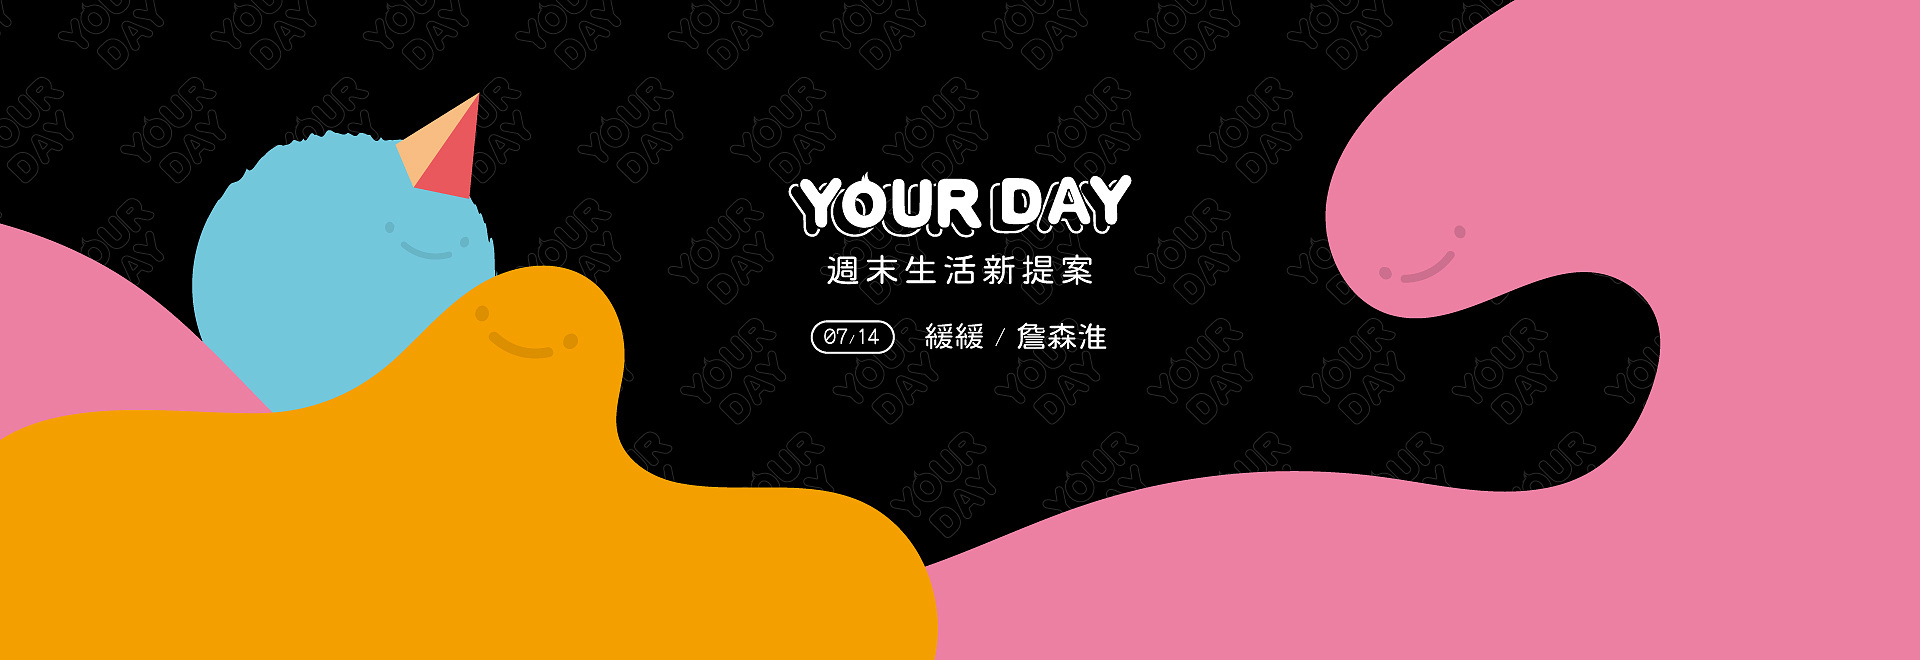 2019 【YOUR DAY 7/14】週末生活新提案